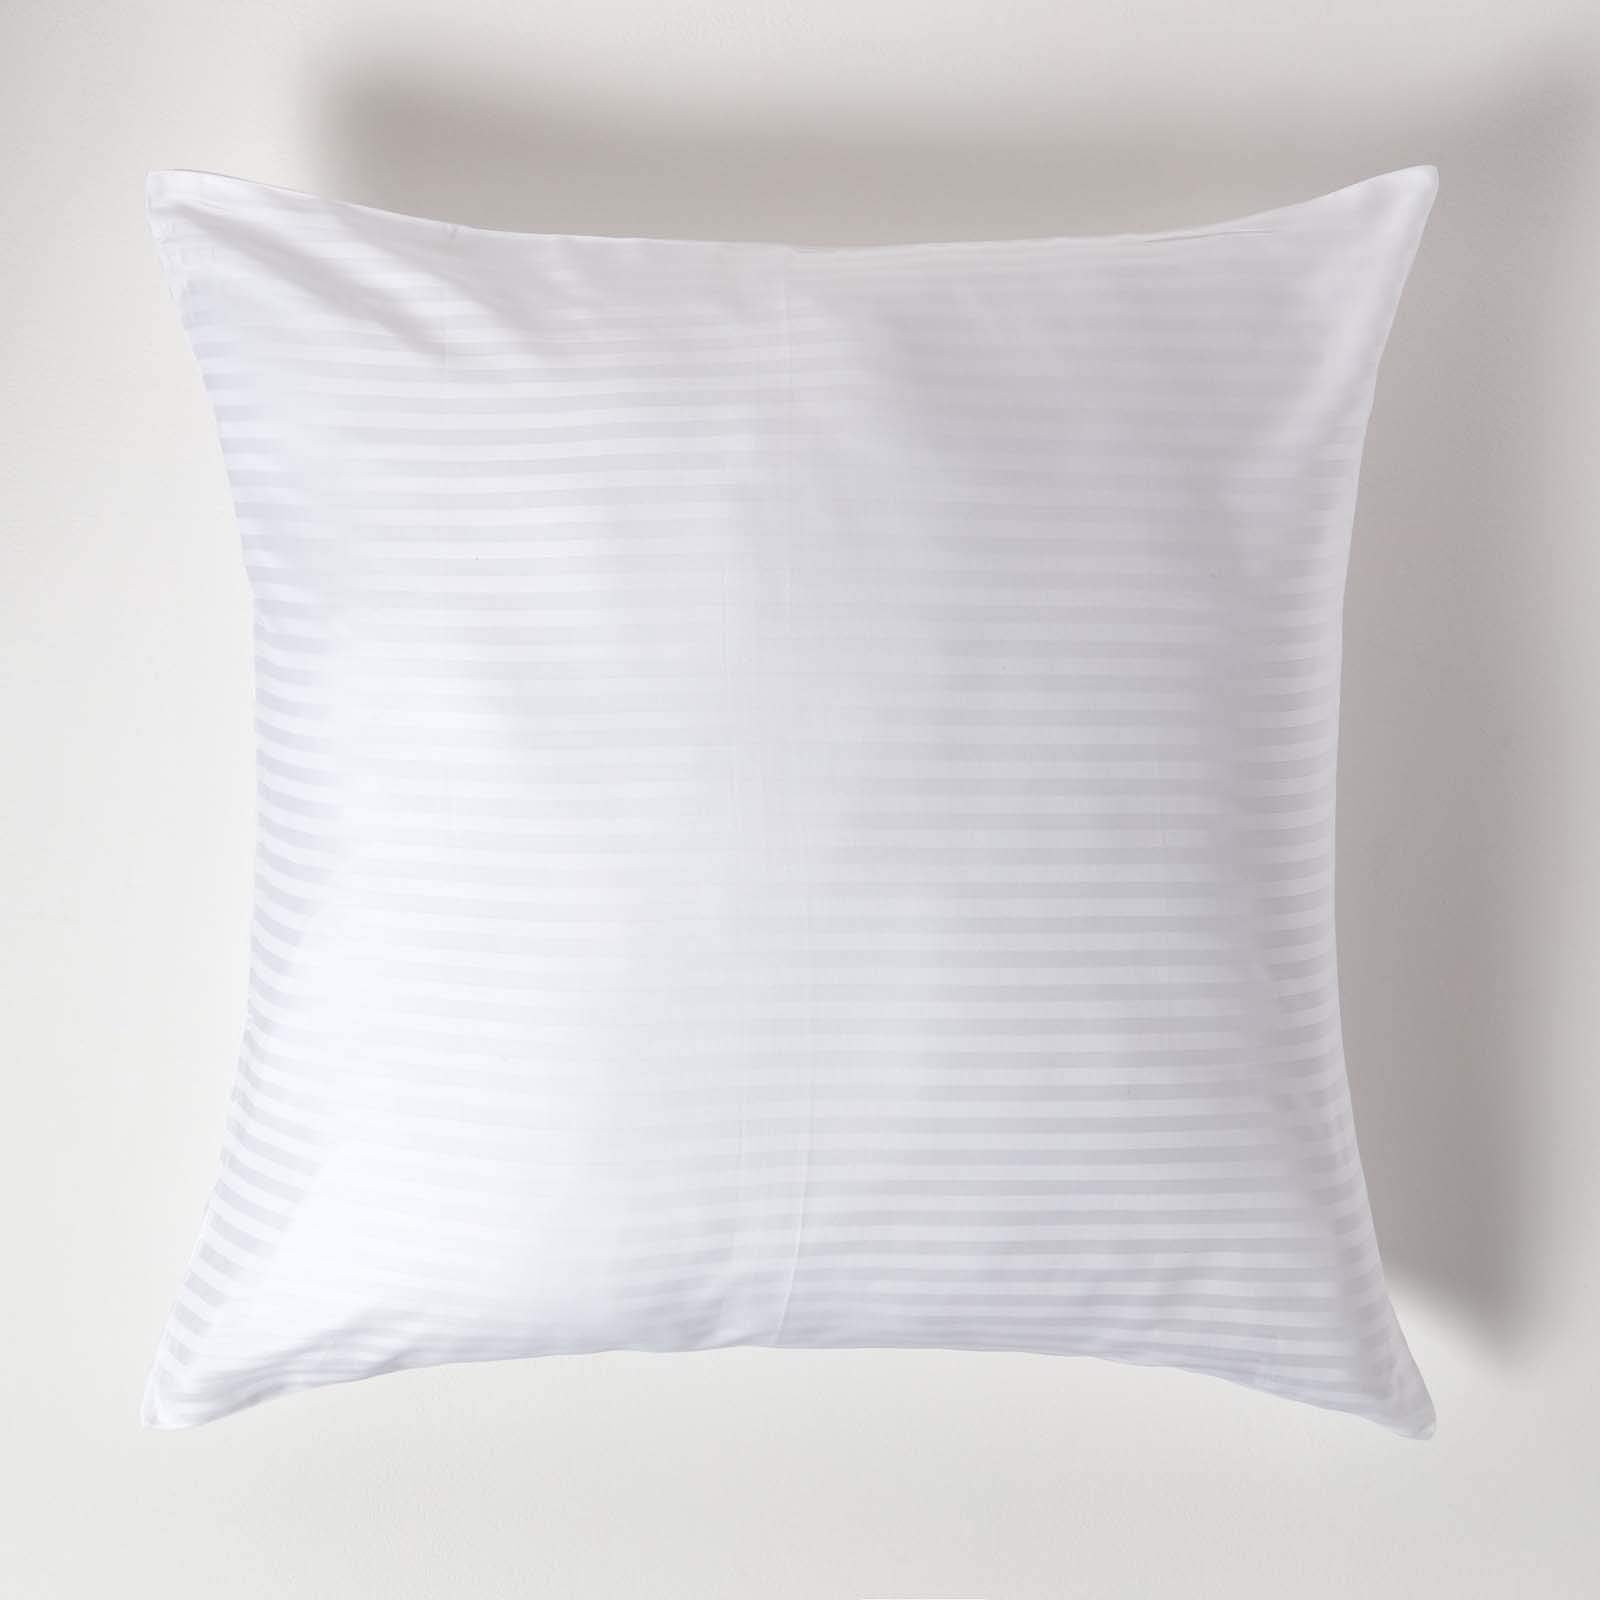 HOMESCAPES White Pure Egyptian Cotton Euro Size Pillowcase 80 x 80 cm 330 TC 500 Thread Count Percale Equivalent Satin Stripe Pillow Case with Zip